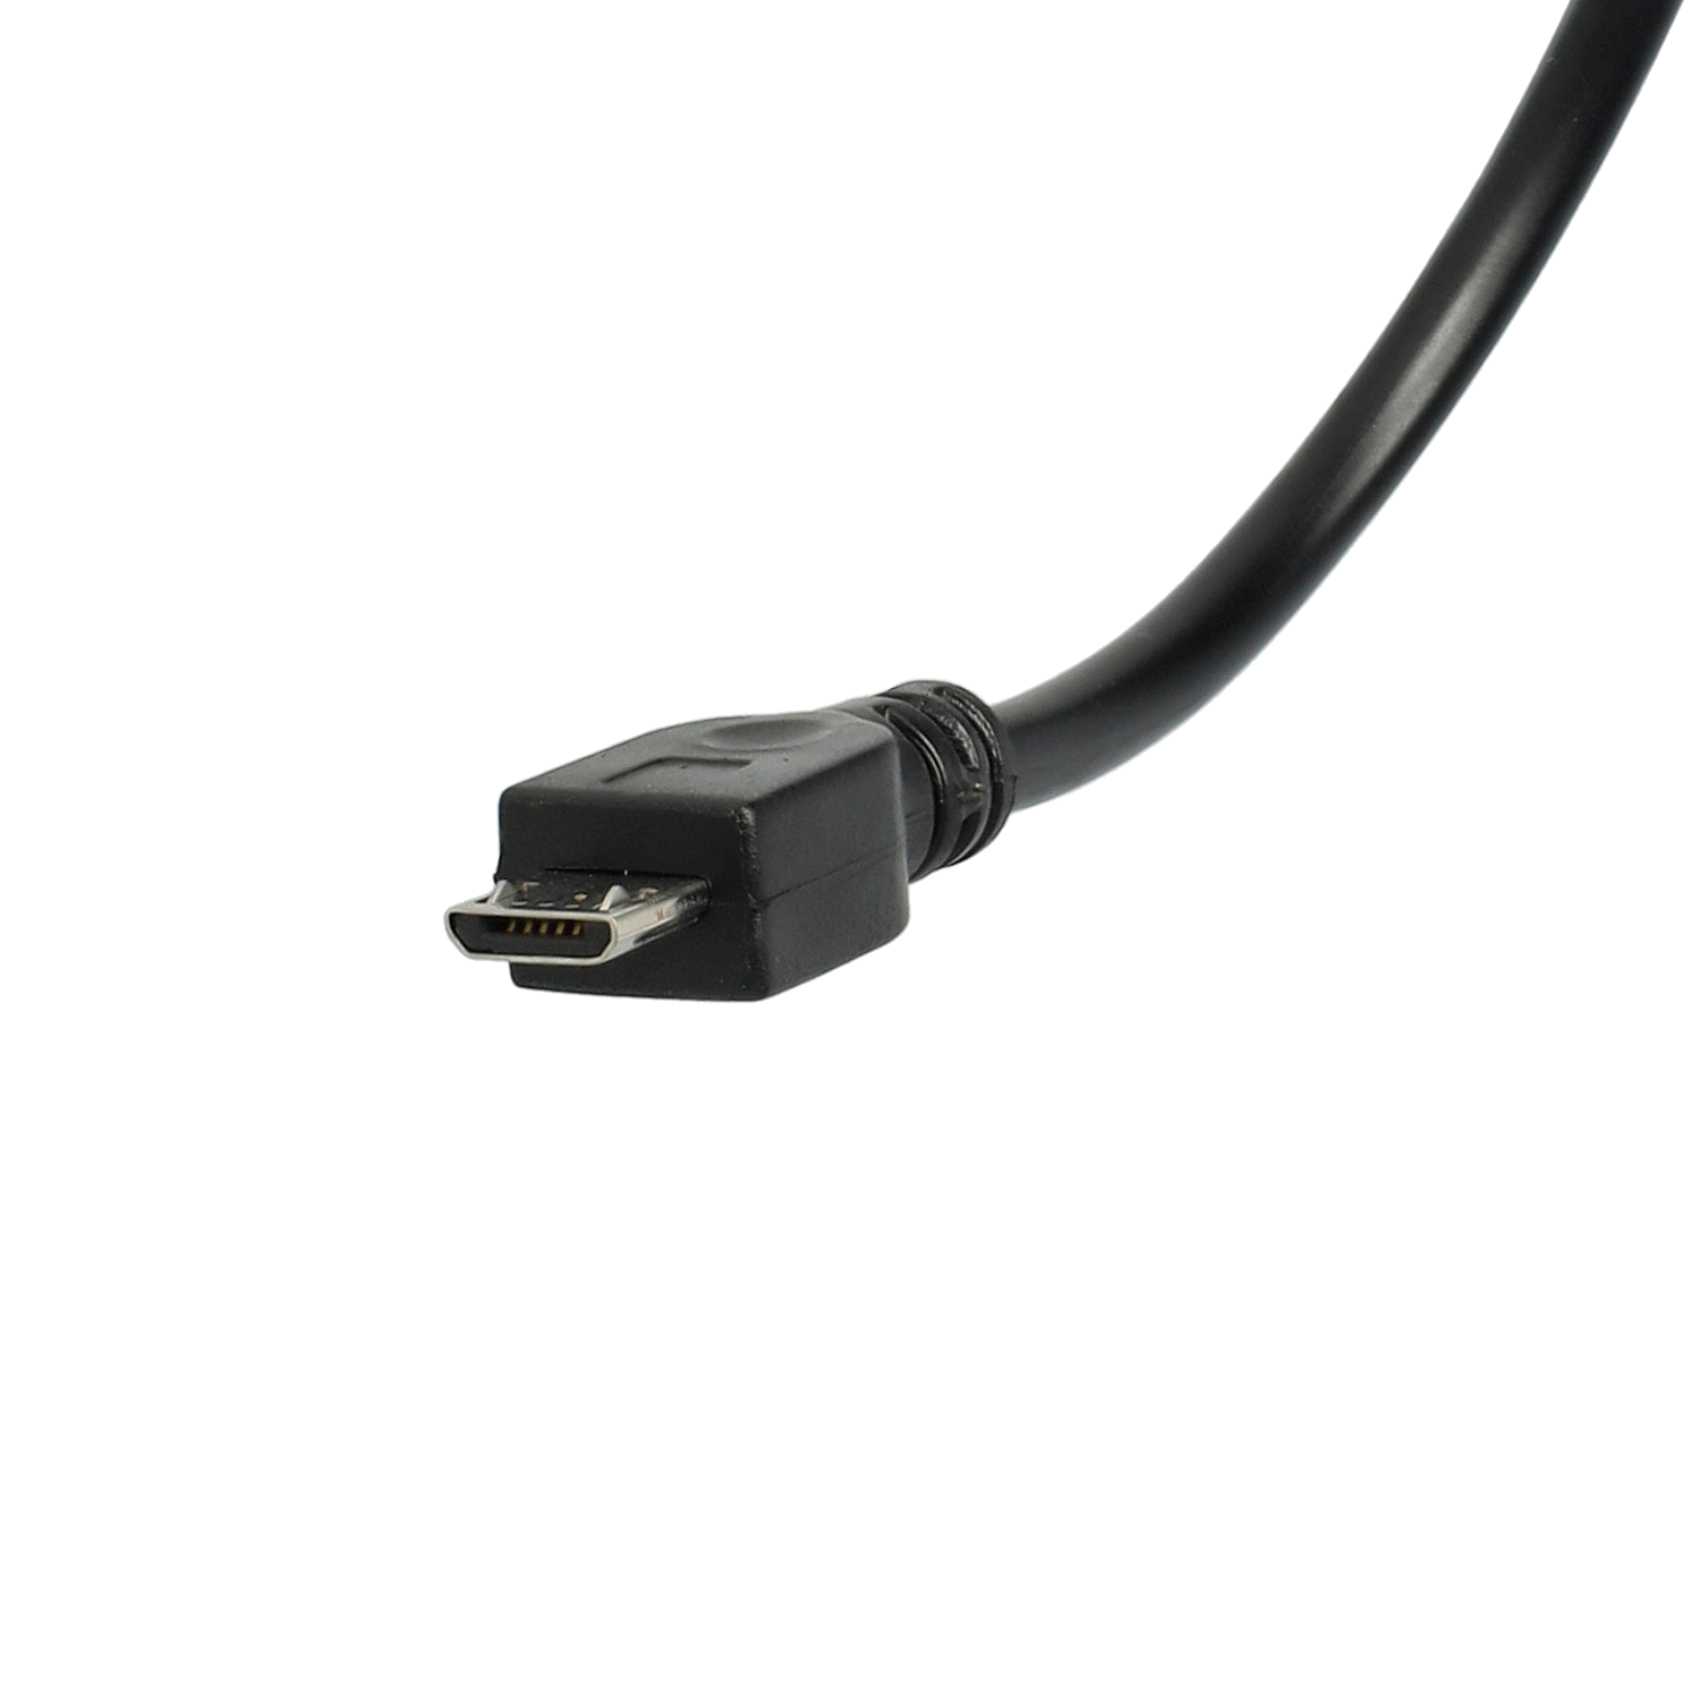 Adapter OTG USB On The Go z Micro-USB na USB (żeński) do smartfona, tableta, laptopa